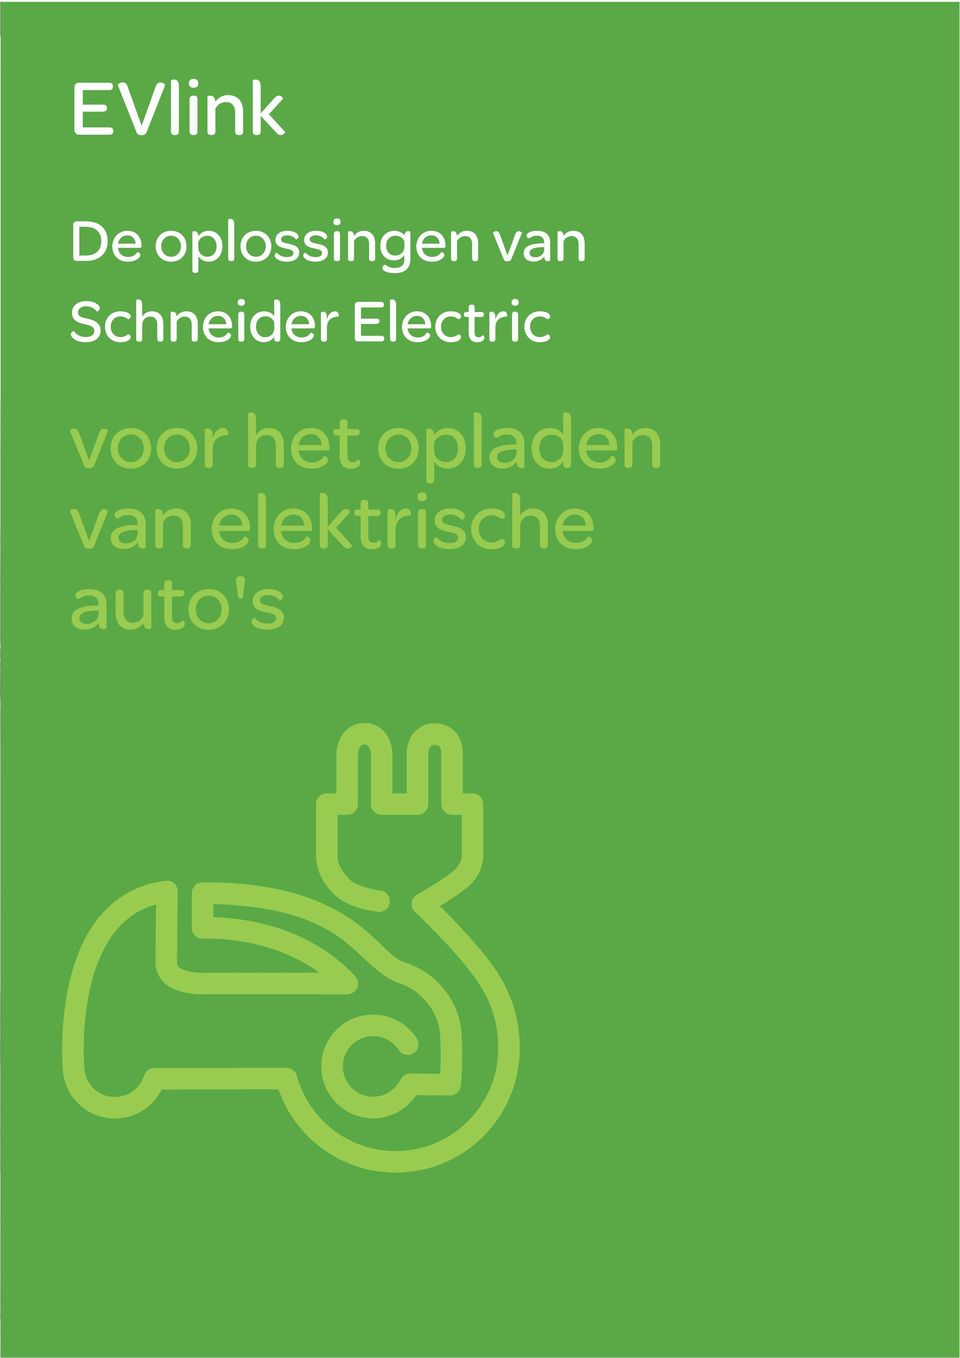 Schneider Electric voor